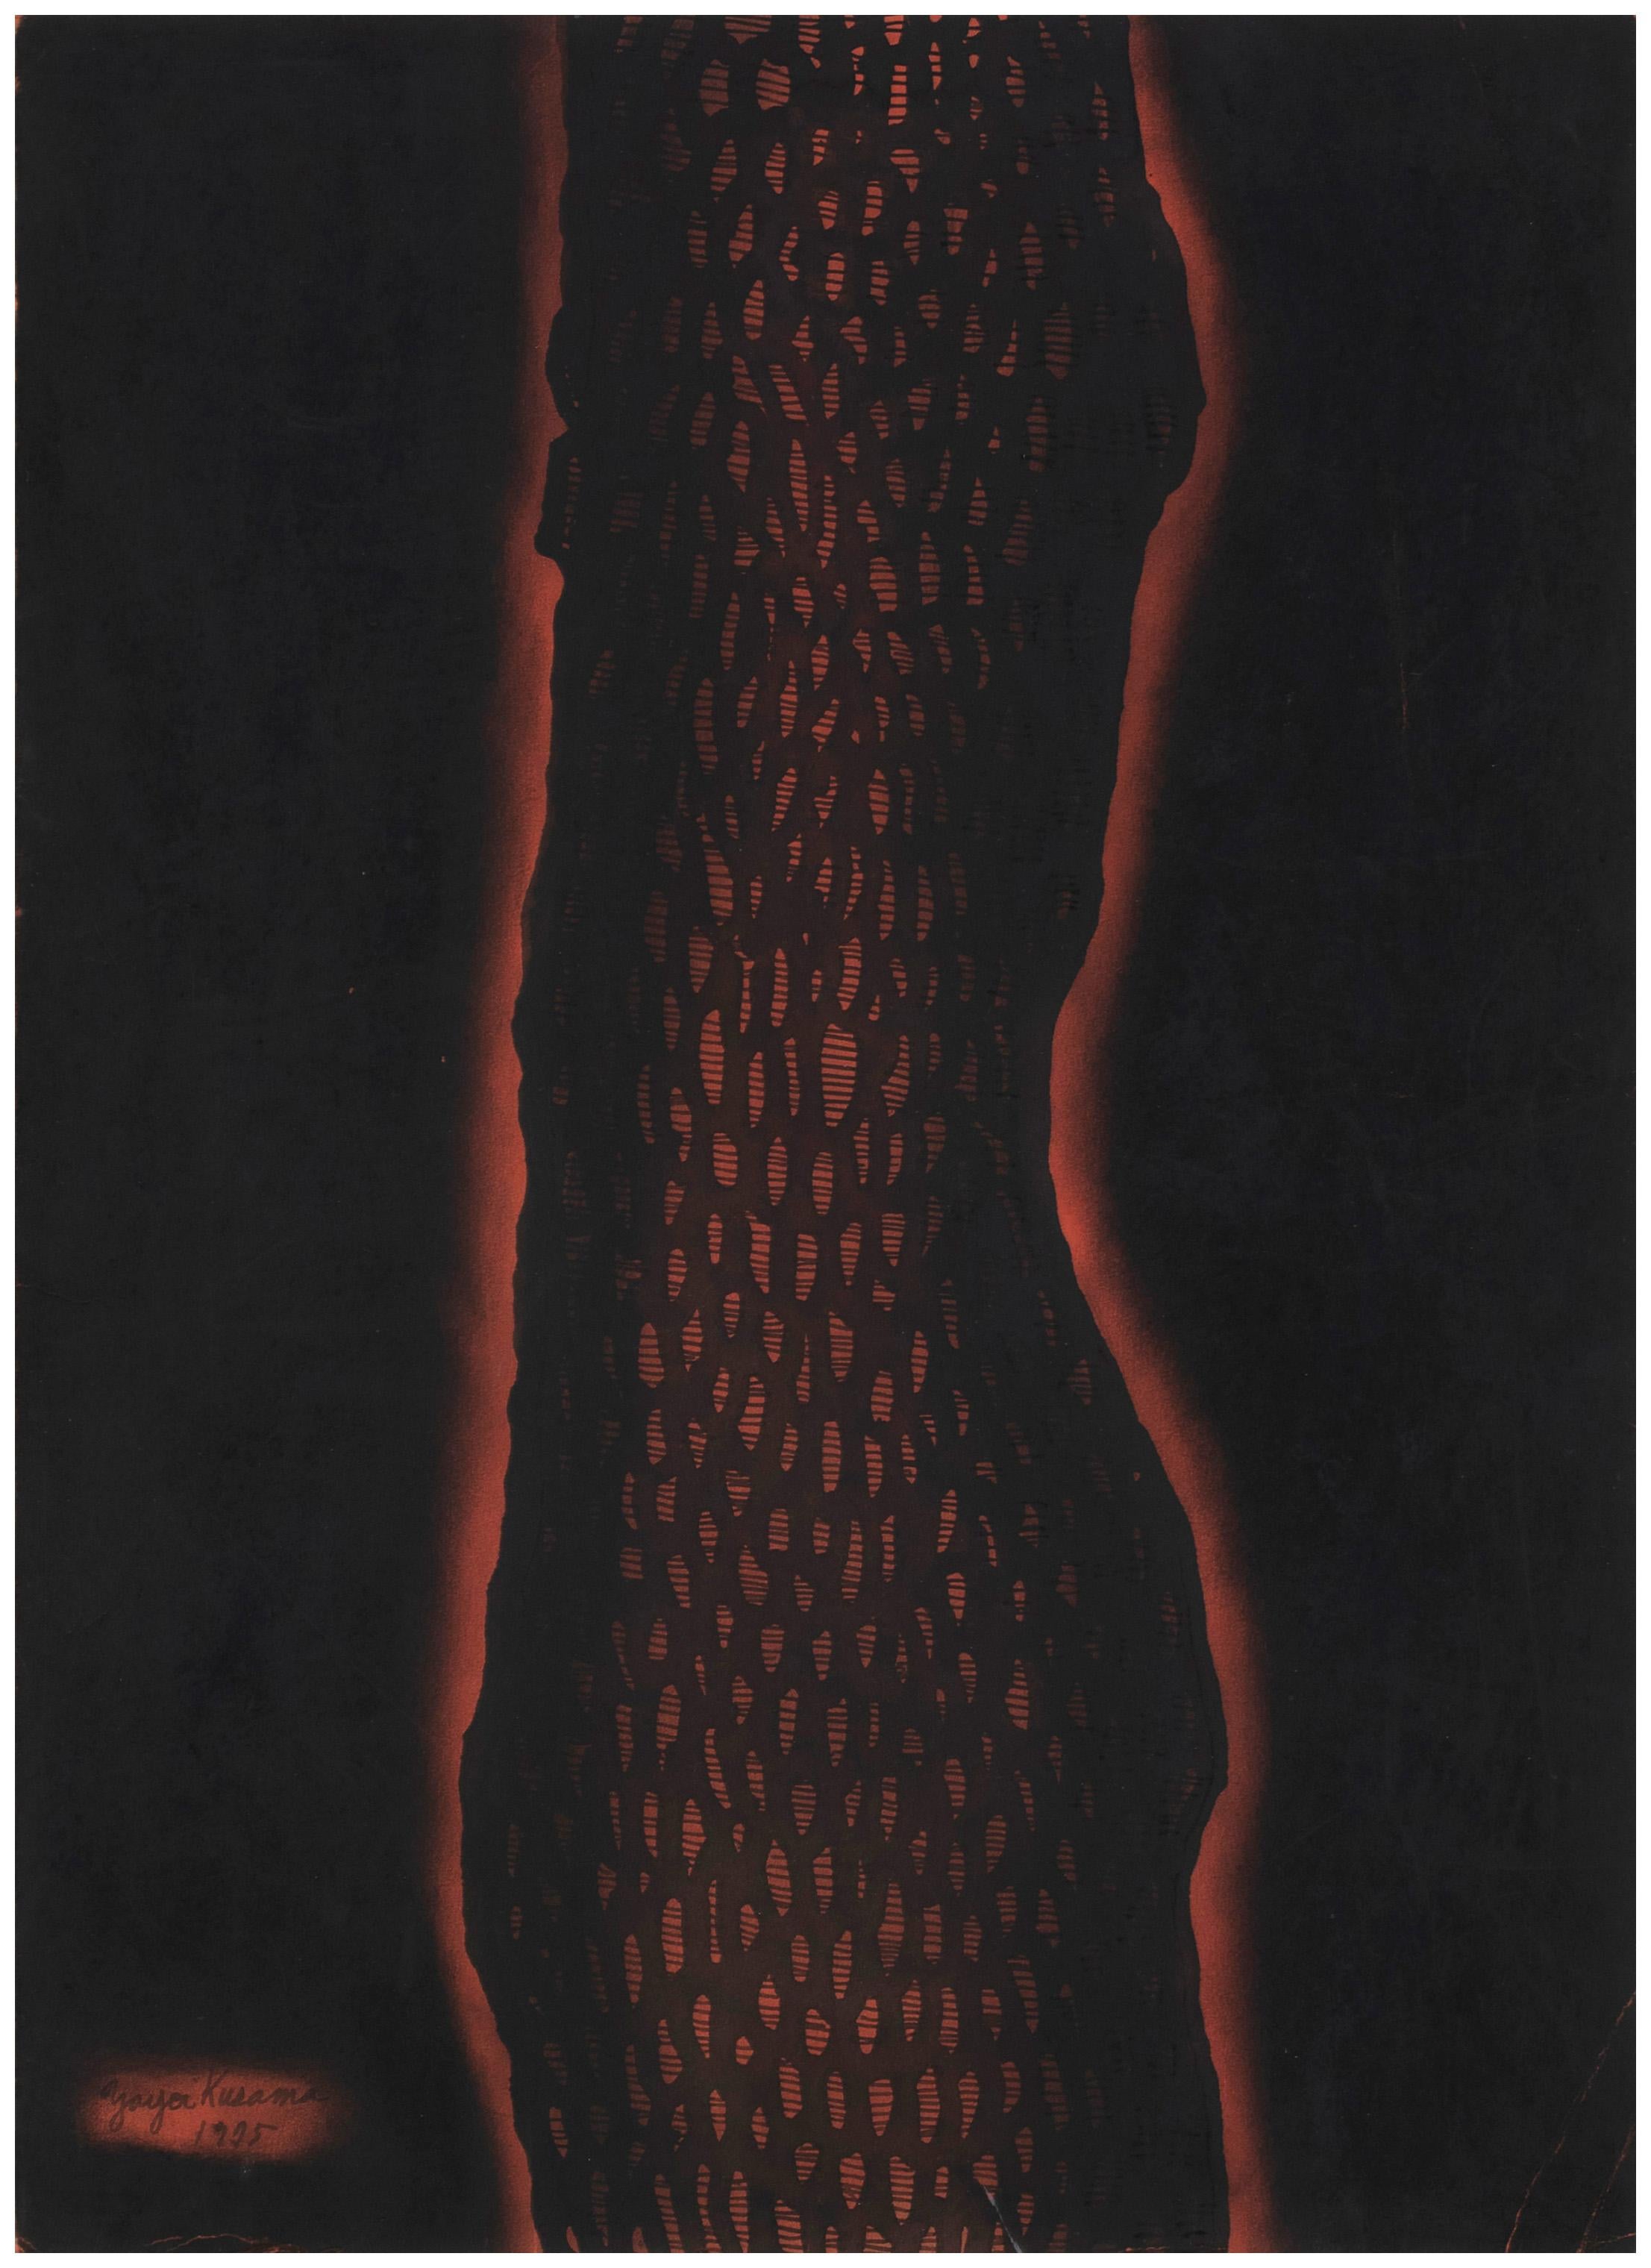 Red River Inside my Eyelids par Yayoi Kusama - Art contemporain, femme artiste